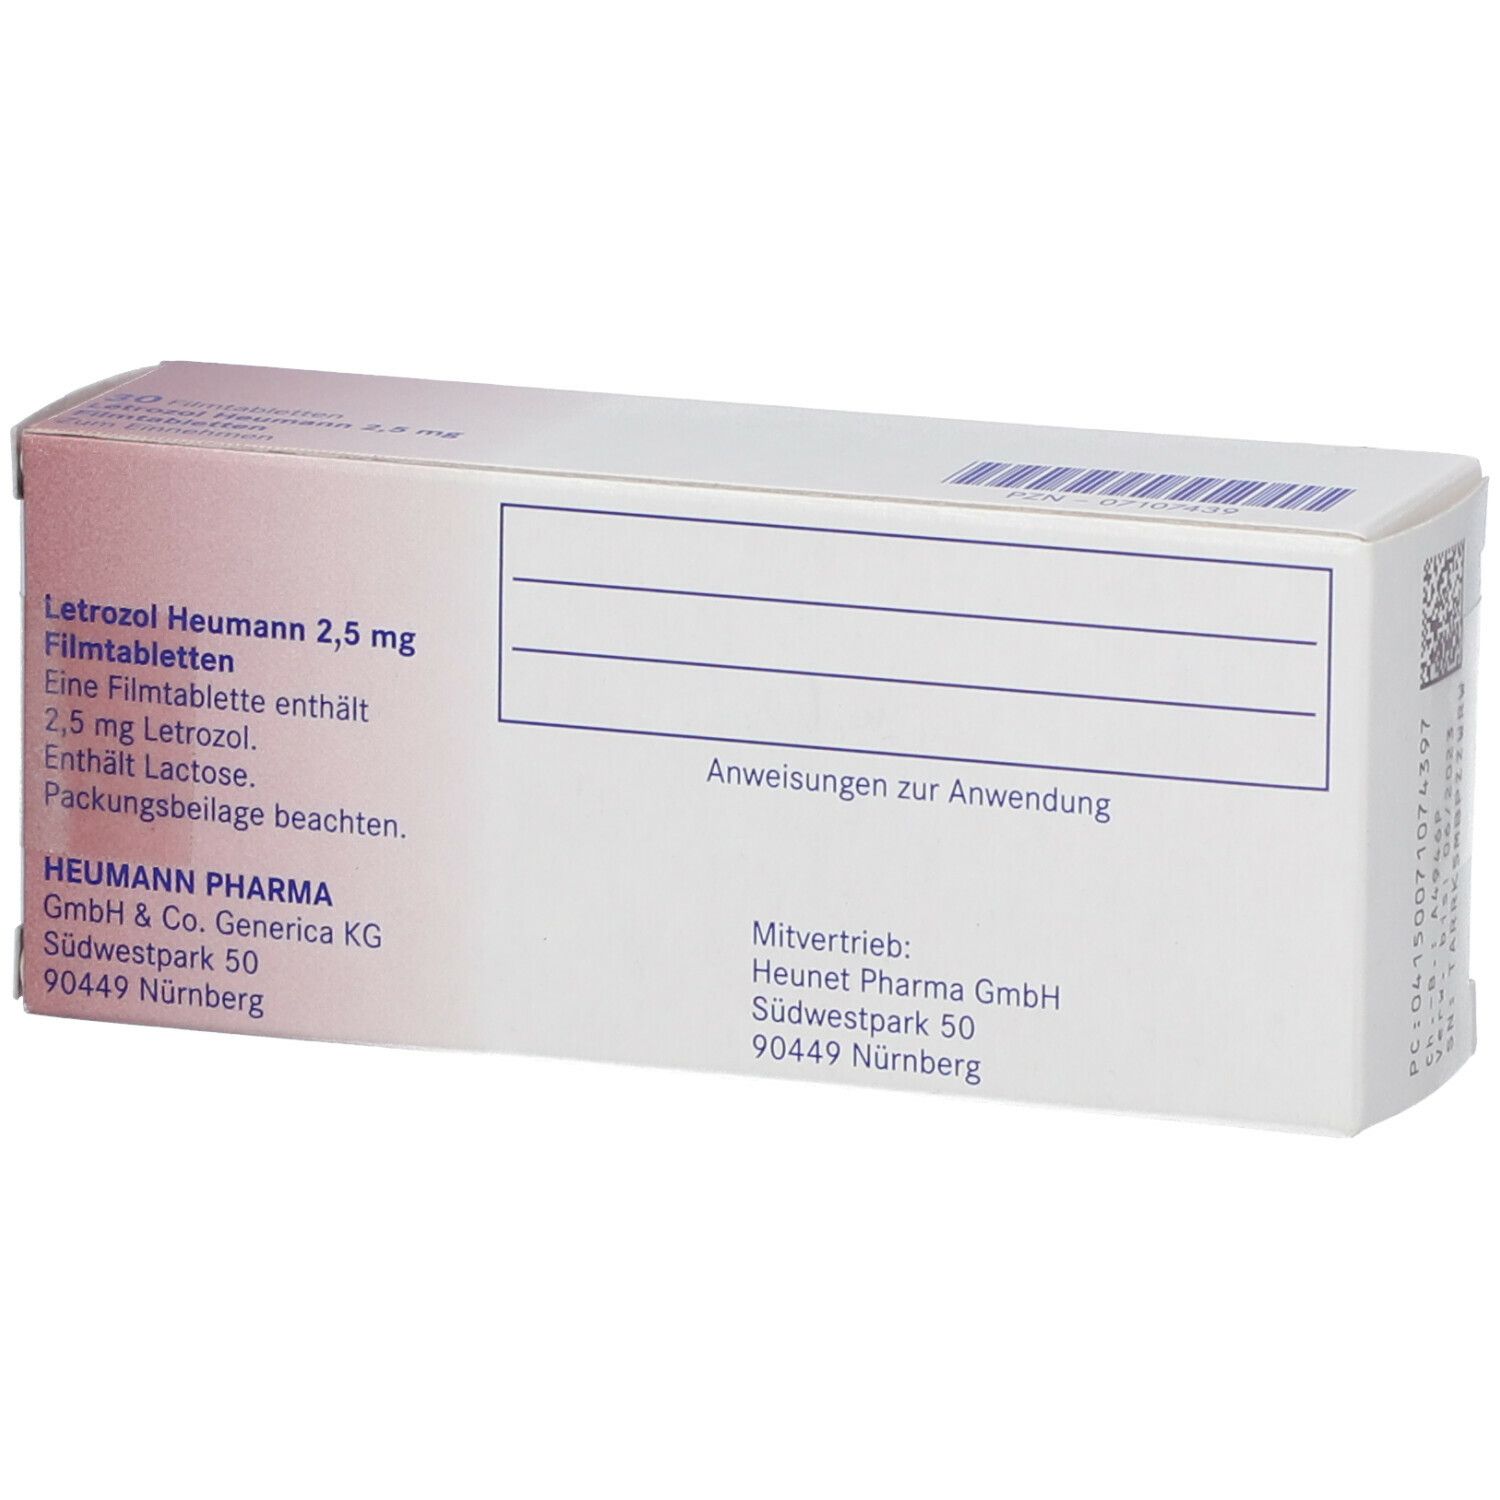 Letrozol Heumann 2,5 mg